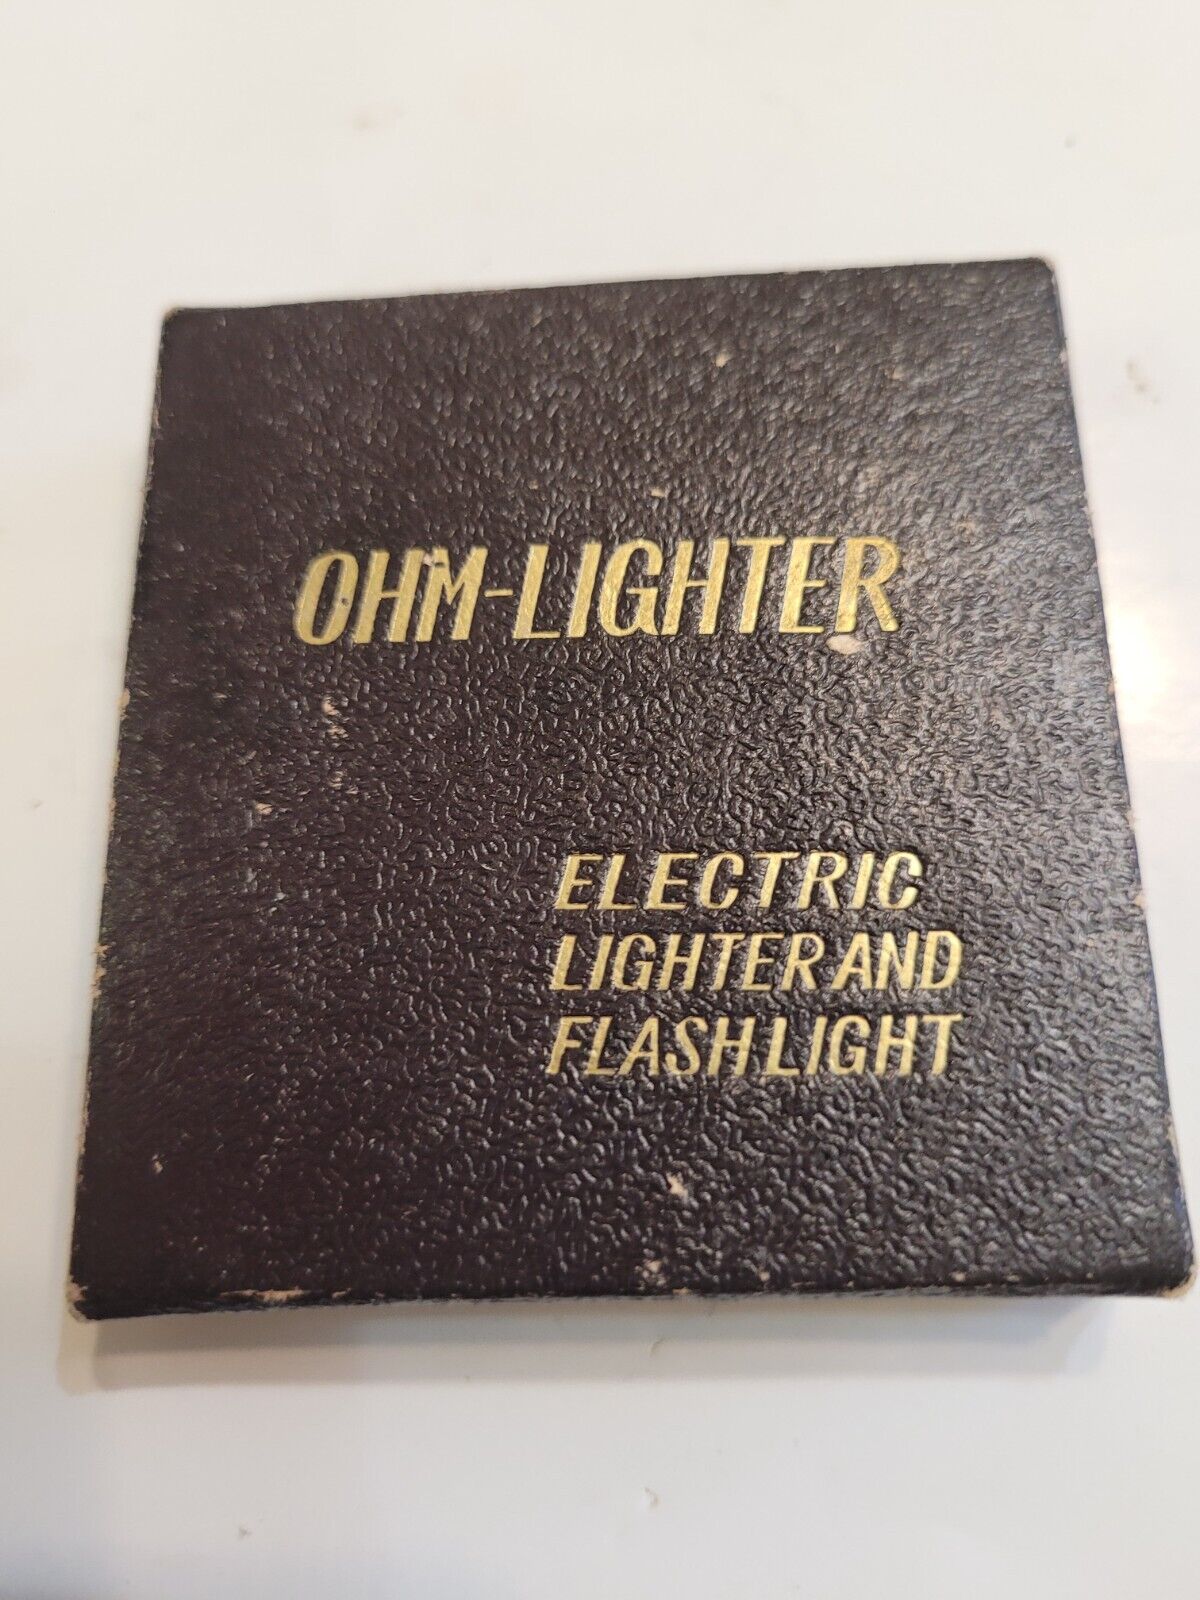 Vintage Magna OHM Electronic Lighter and Flashlight w/Box.